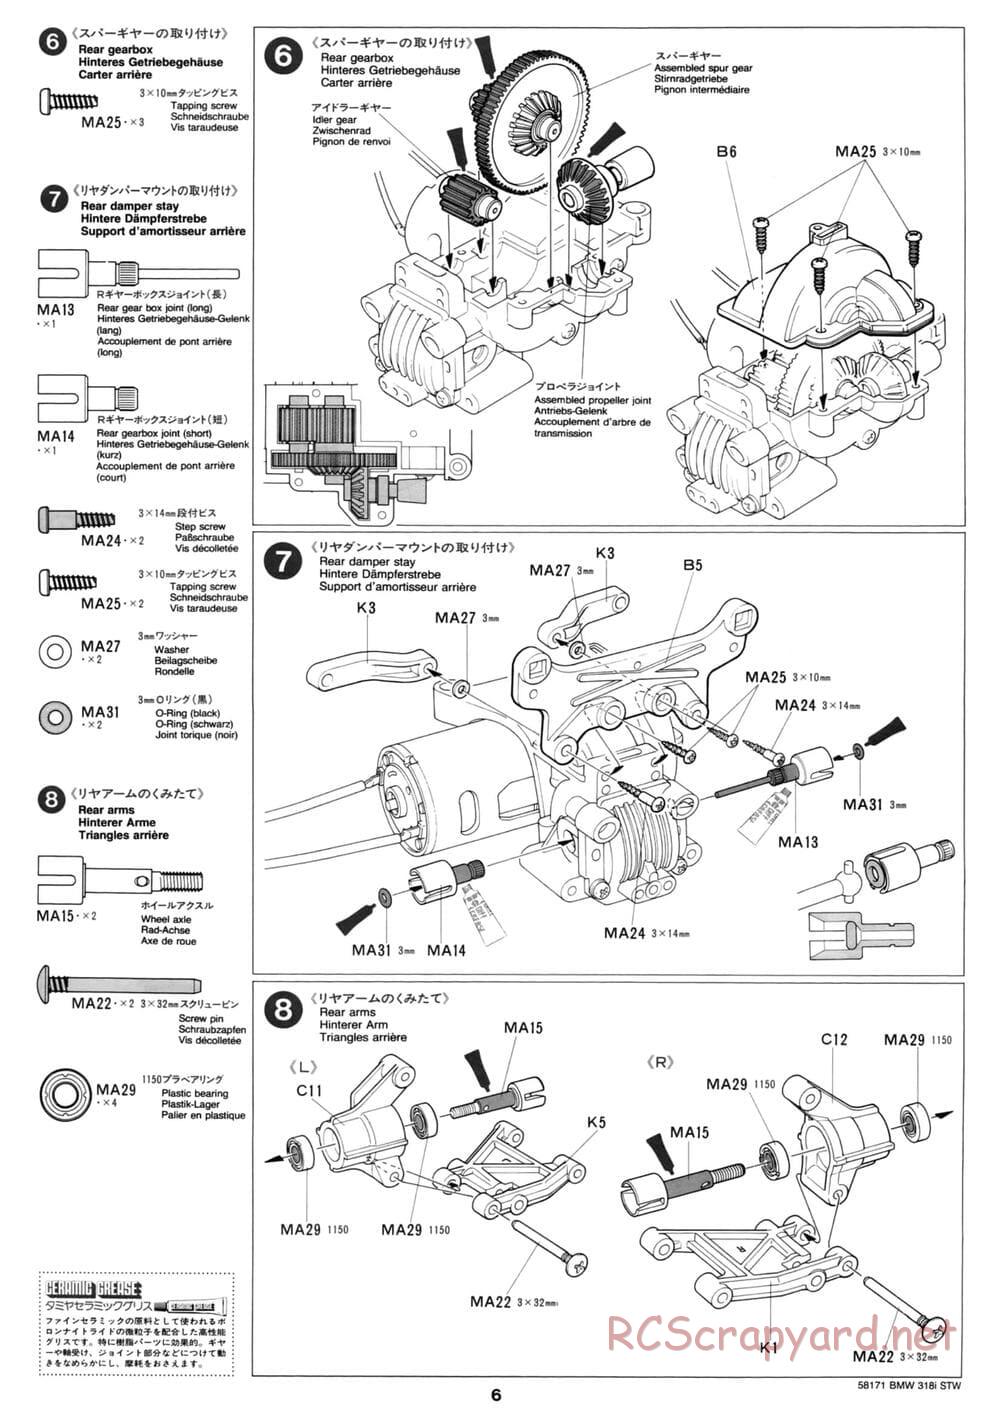 Tamiya - BMW 318i STW - TA-02 Chassis - Manual - Page 6